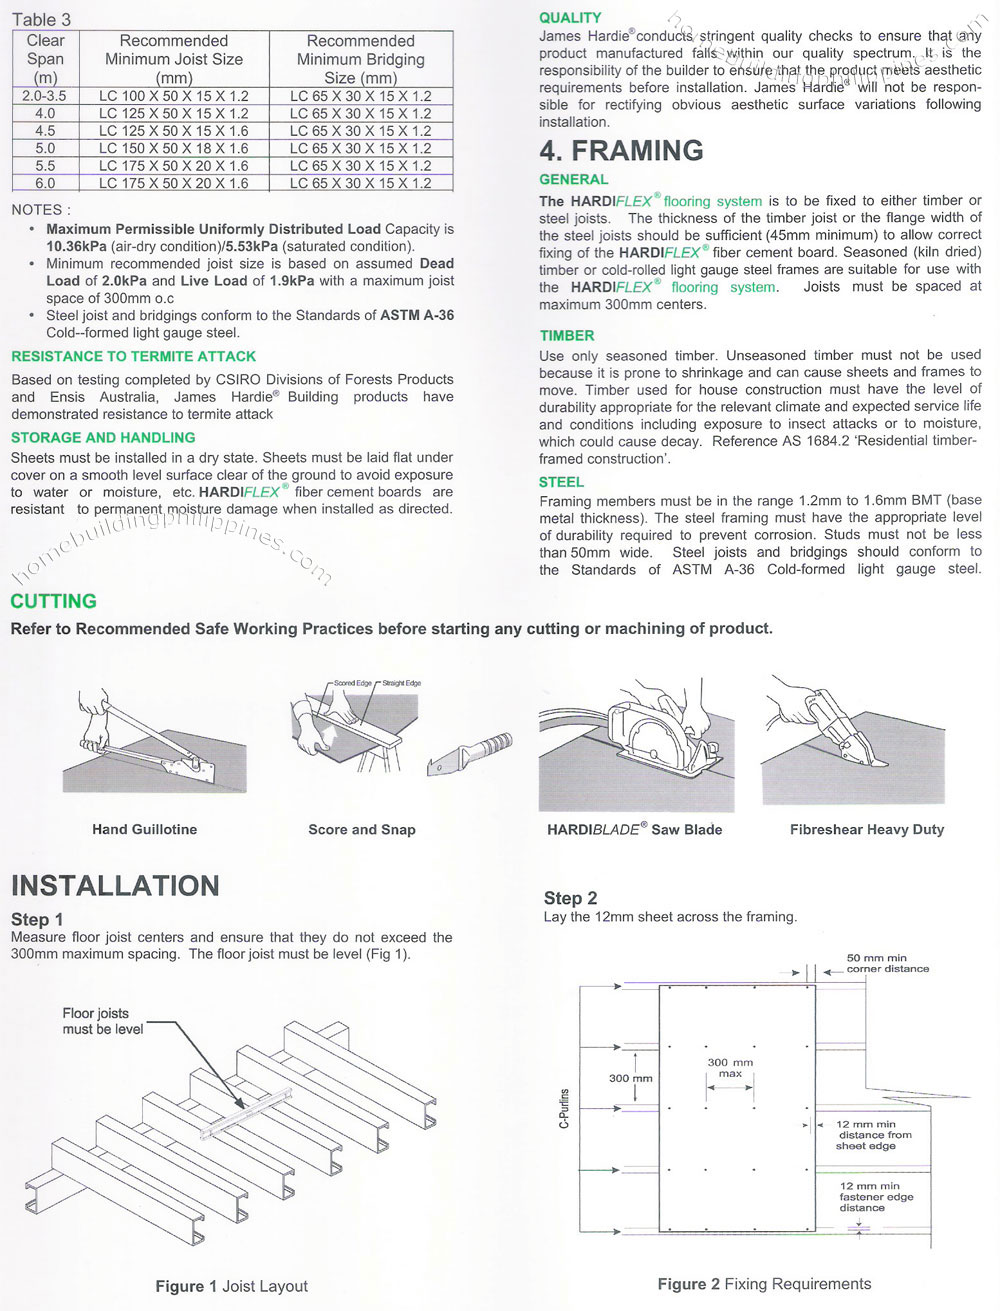 HardieFlex Flooring System Durable Fiber Cement Board Installation Manual